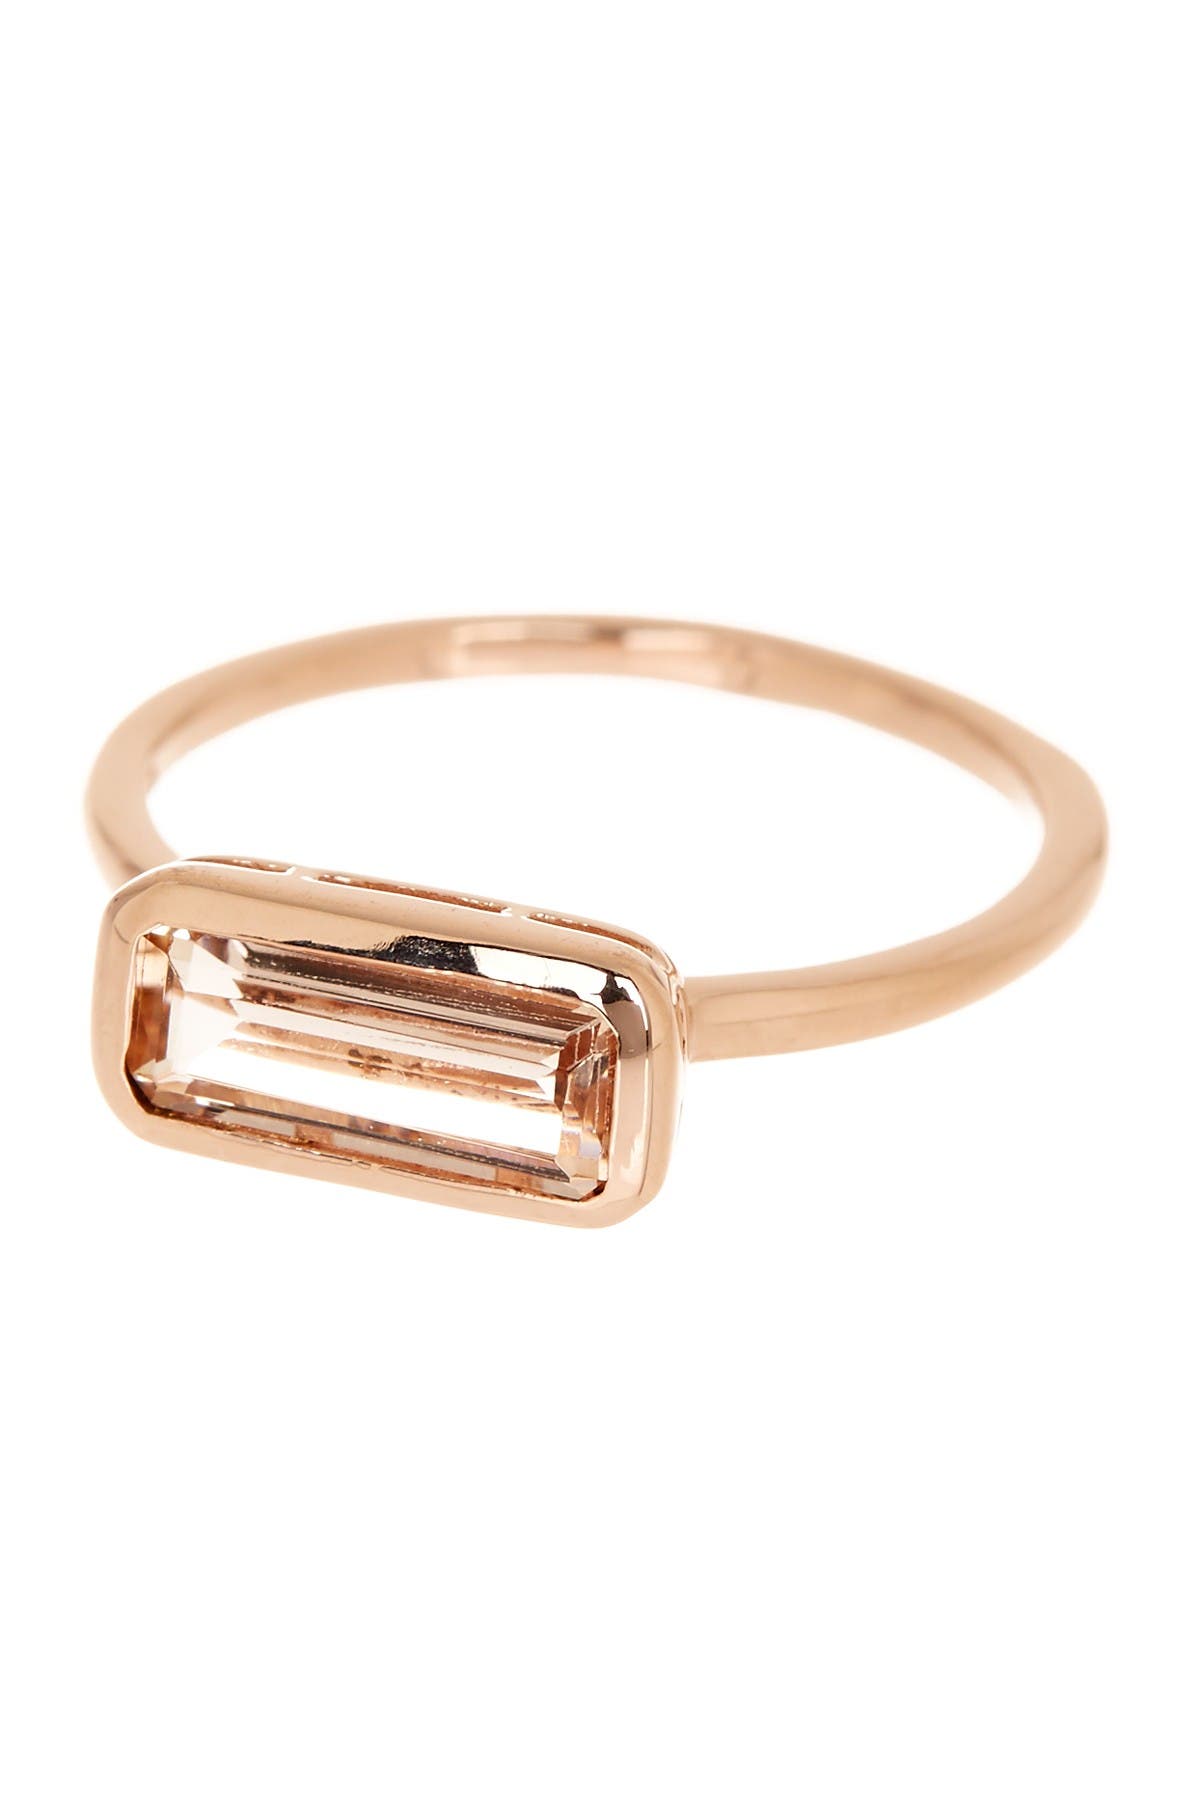 Savvy Cie 18k Rose Gold Vermeil Emerald Cut Morganite Crystal Bar Ring